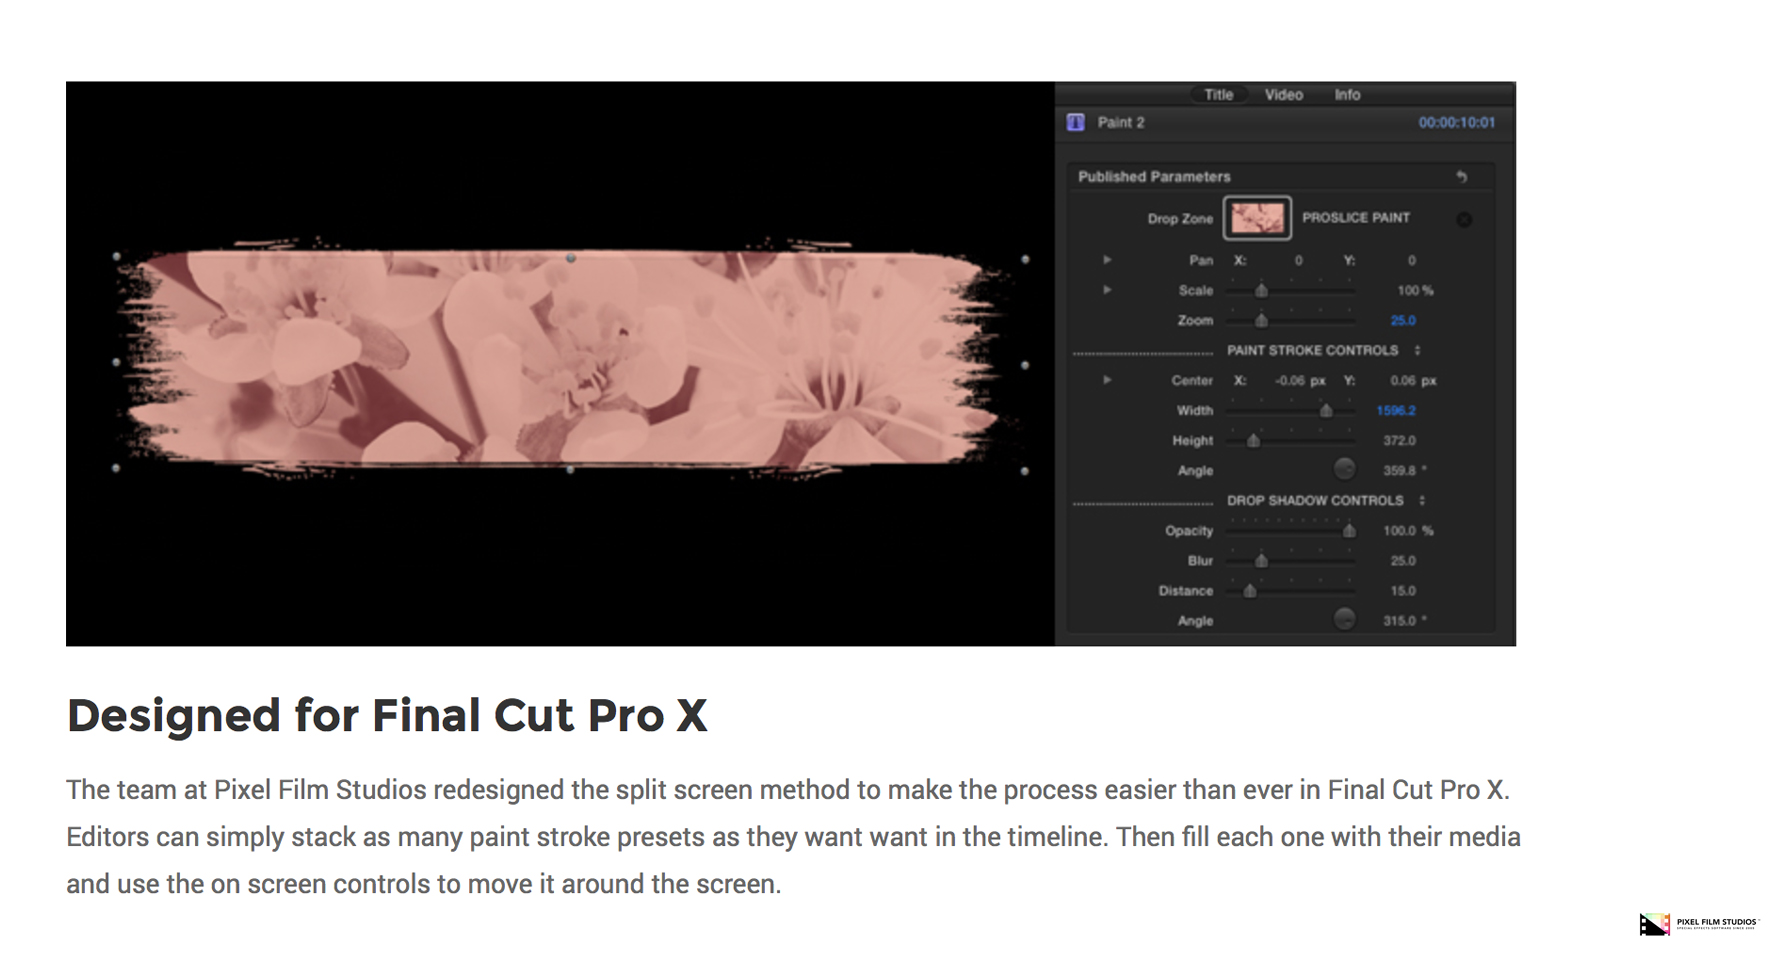 Pixel Film Studios - ProSlice Paint - FCPX Plugin